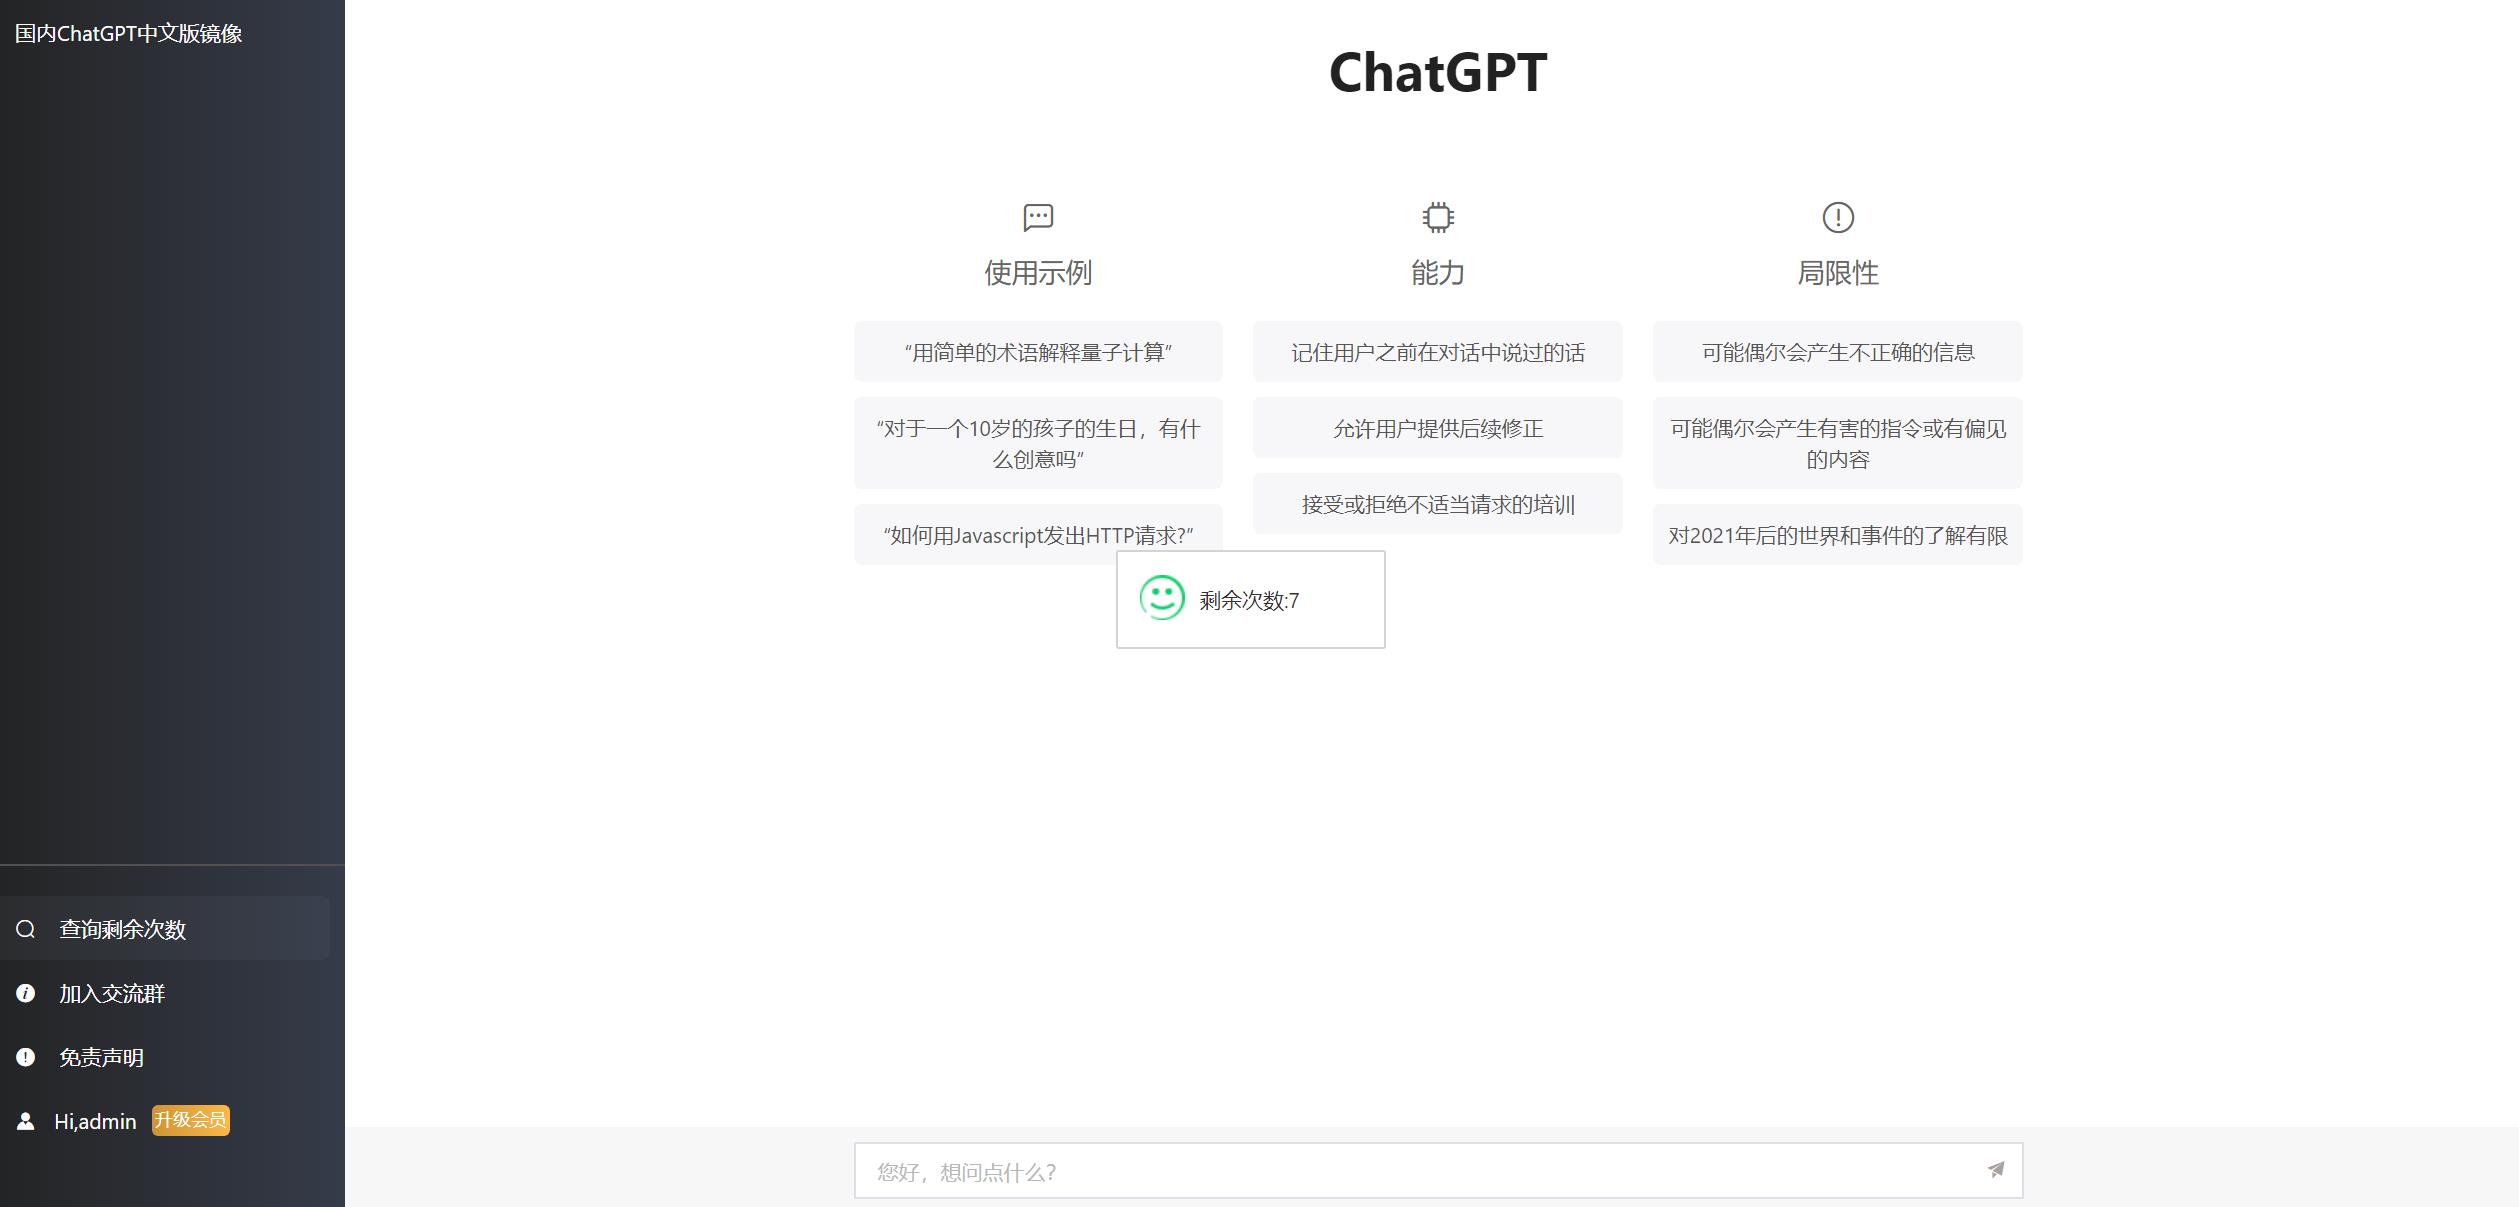 ChatGPT网站的最新版本已经发布，这个版本支持用户购买付费套餐，并且用户可以通过该网站赚取收益。插图3